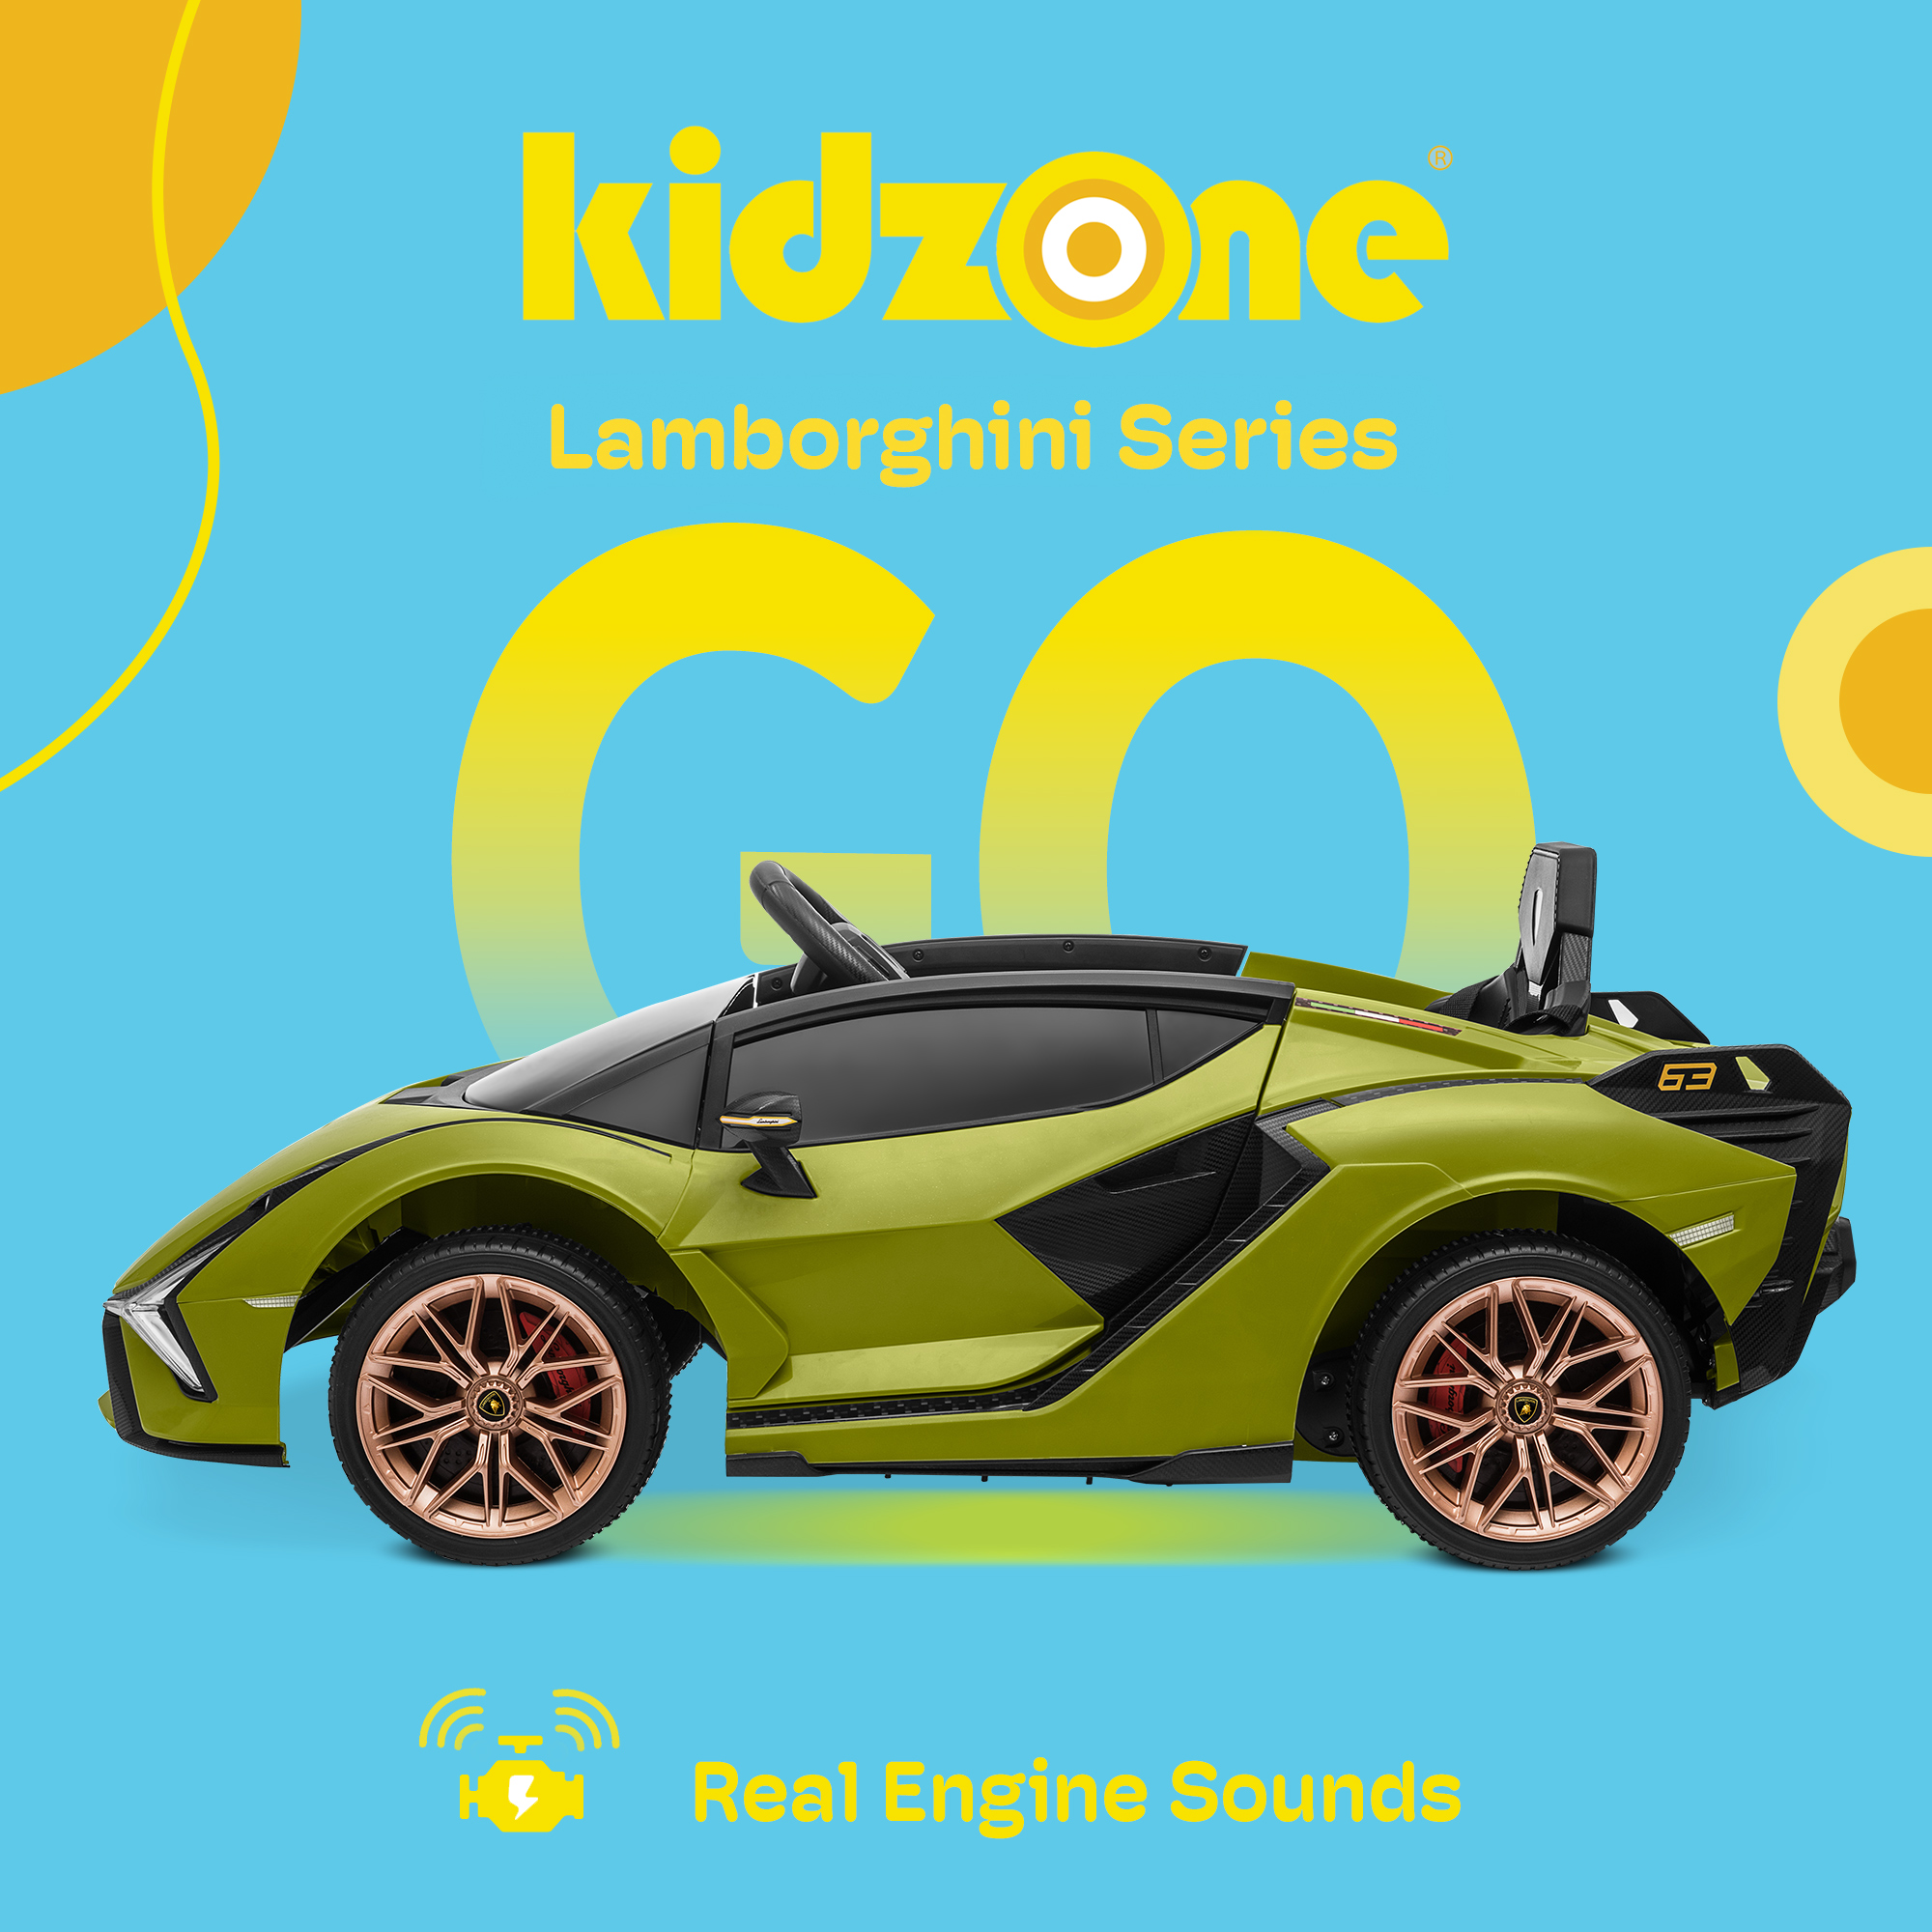 Kidzone Kids 12V Electric Licensed Lamborghini Car – Green with Gold Rim - image 2 of 6